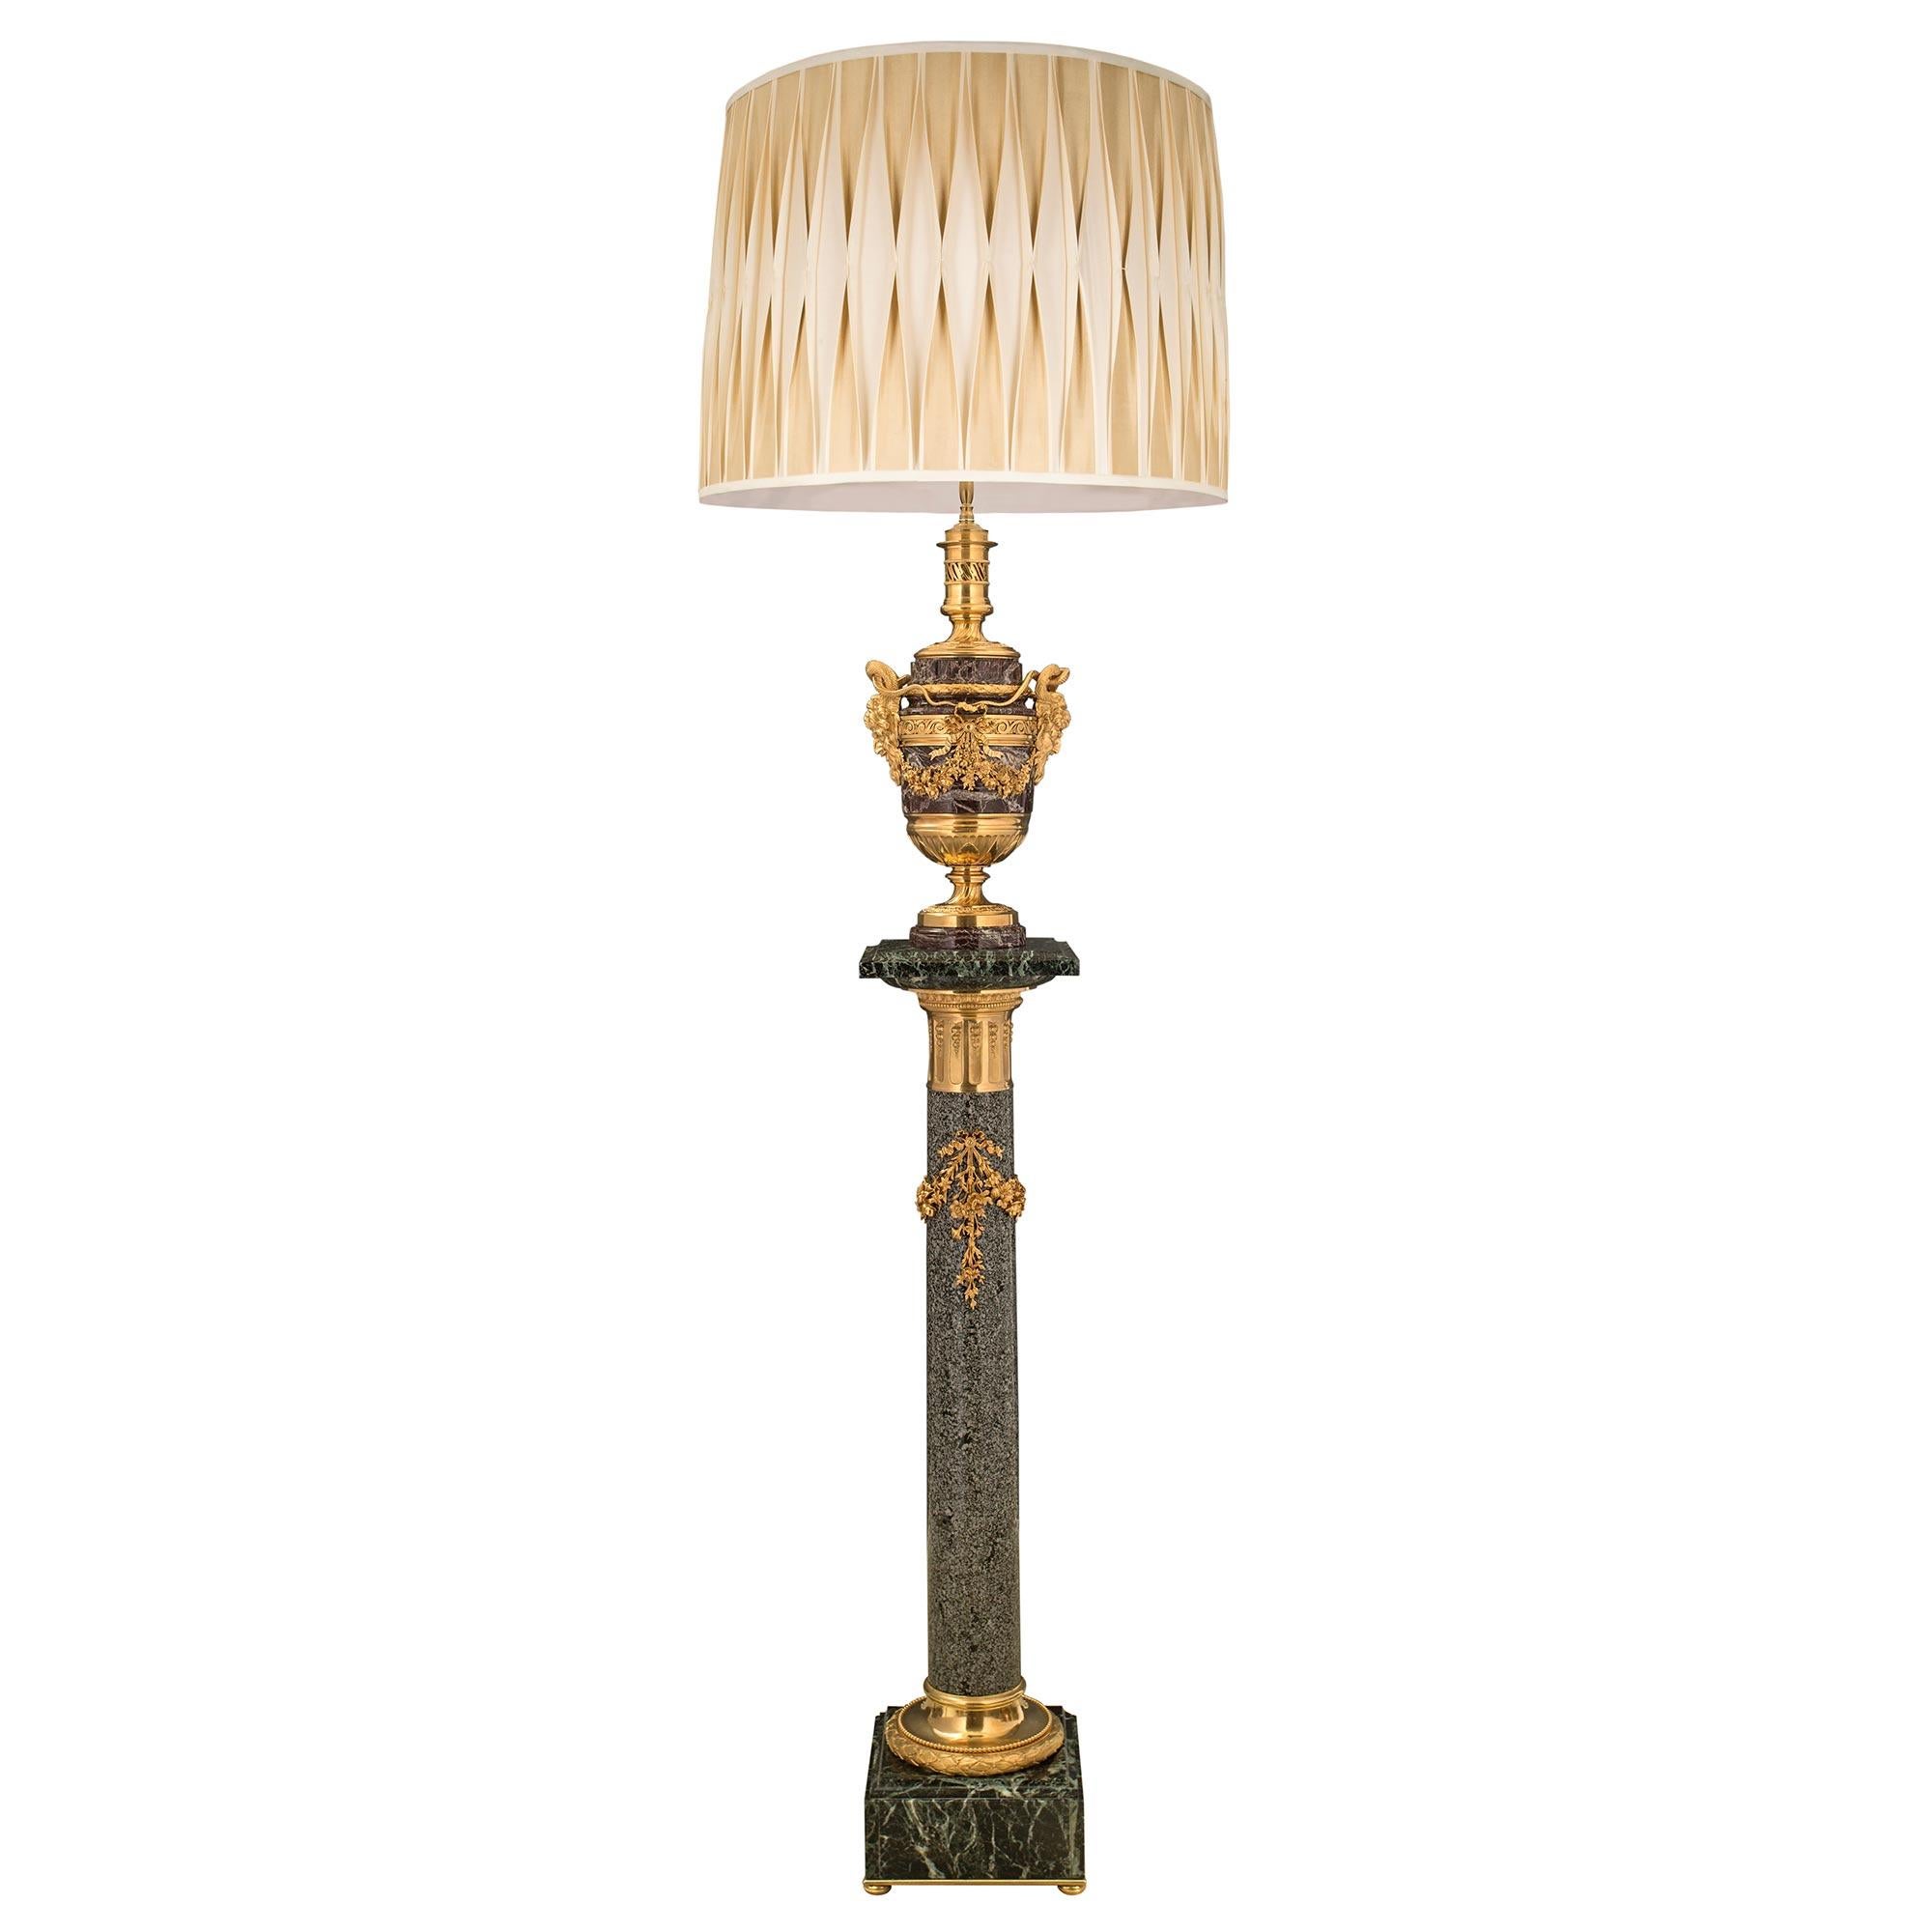 French 19th Century Louis XVI St. Belle Époque Period Floor Lamp For Sale